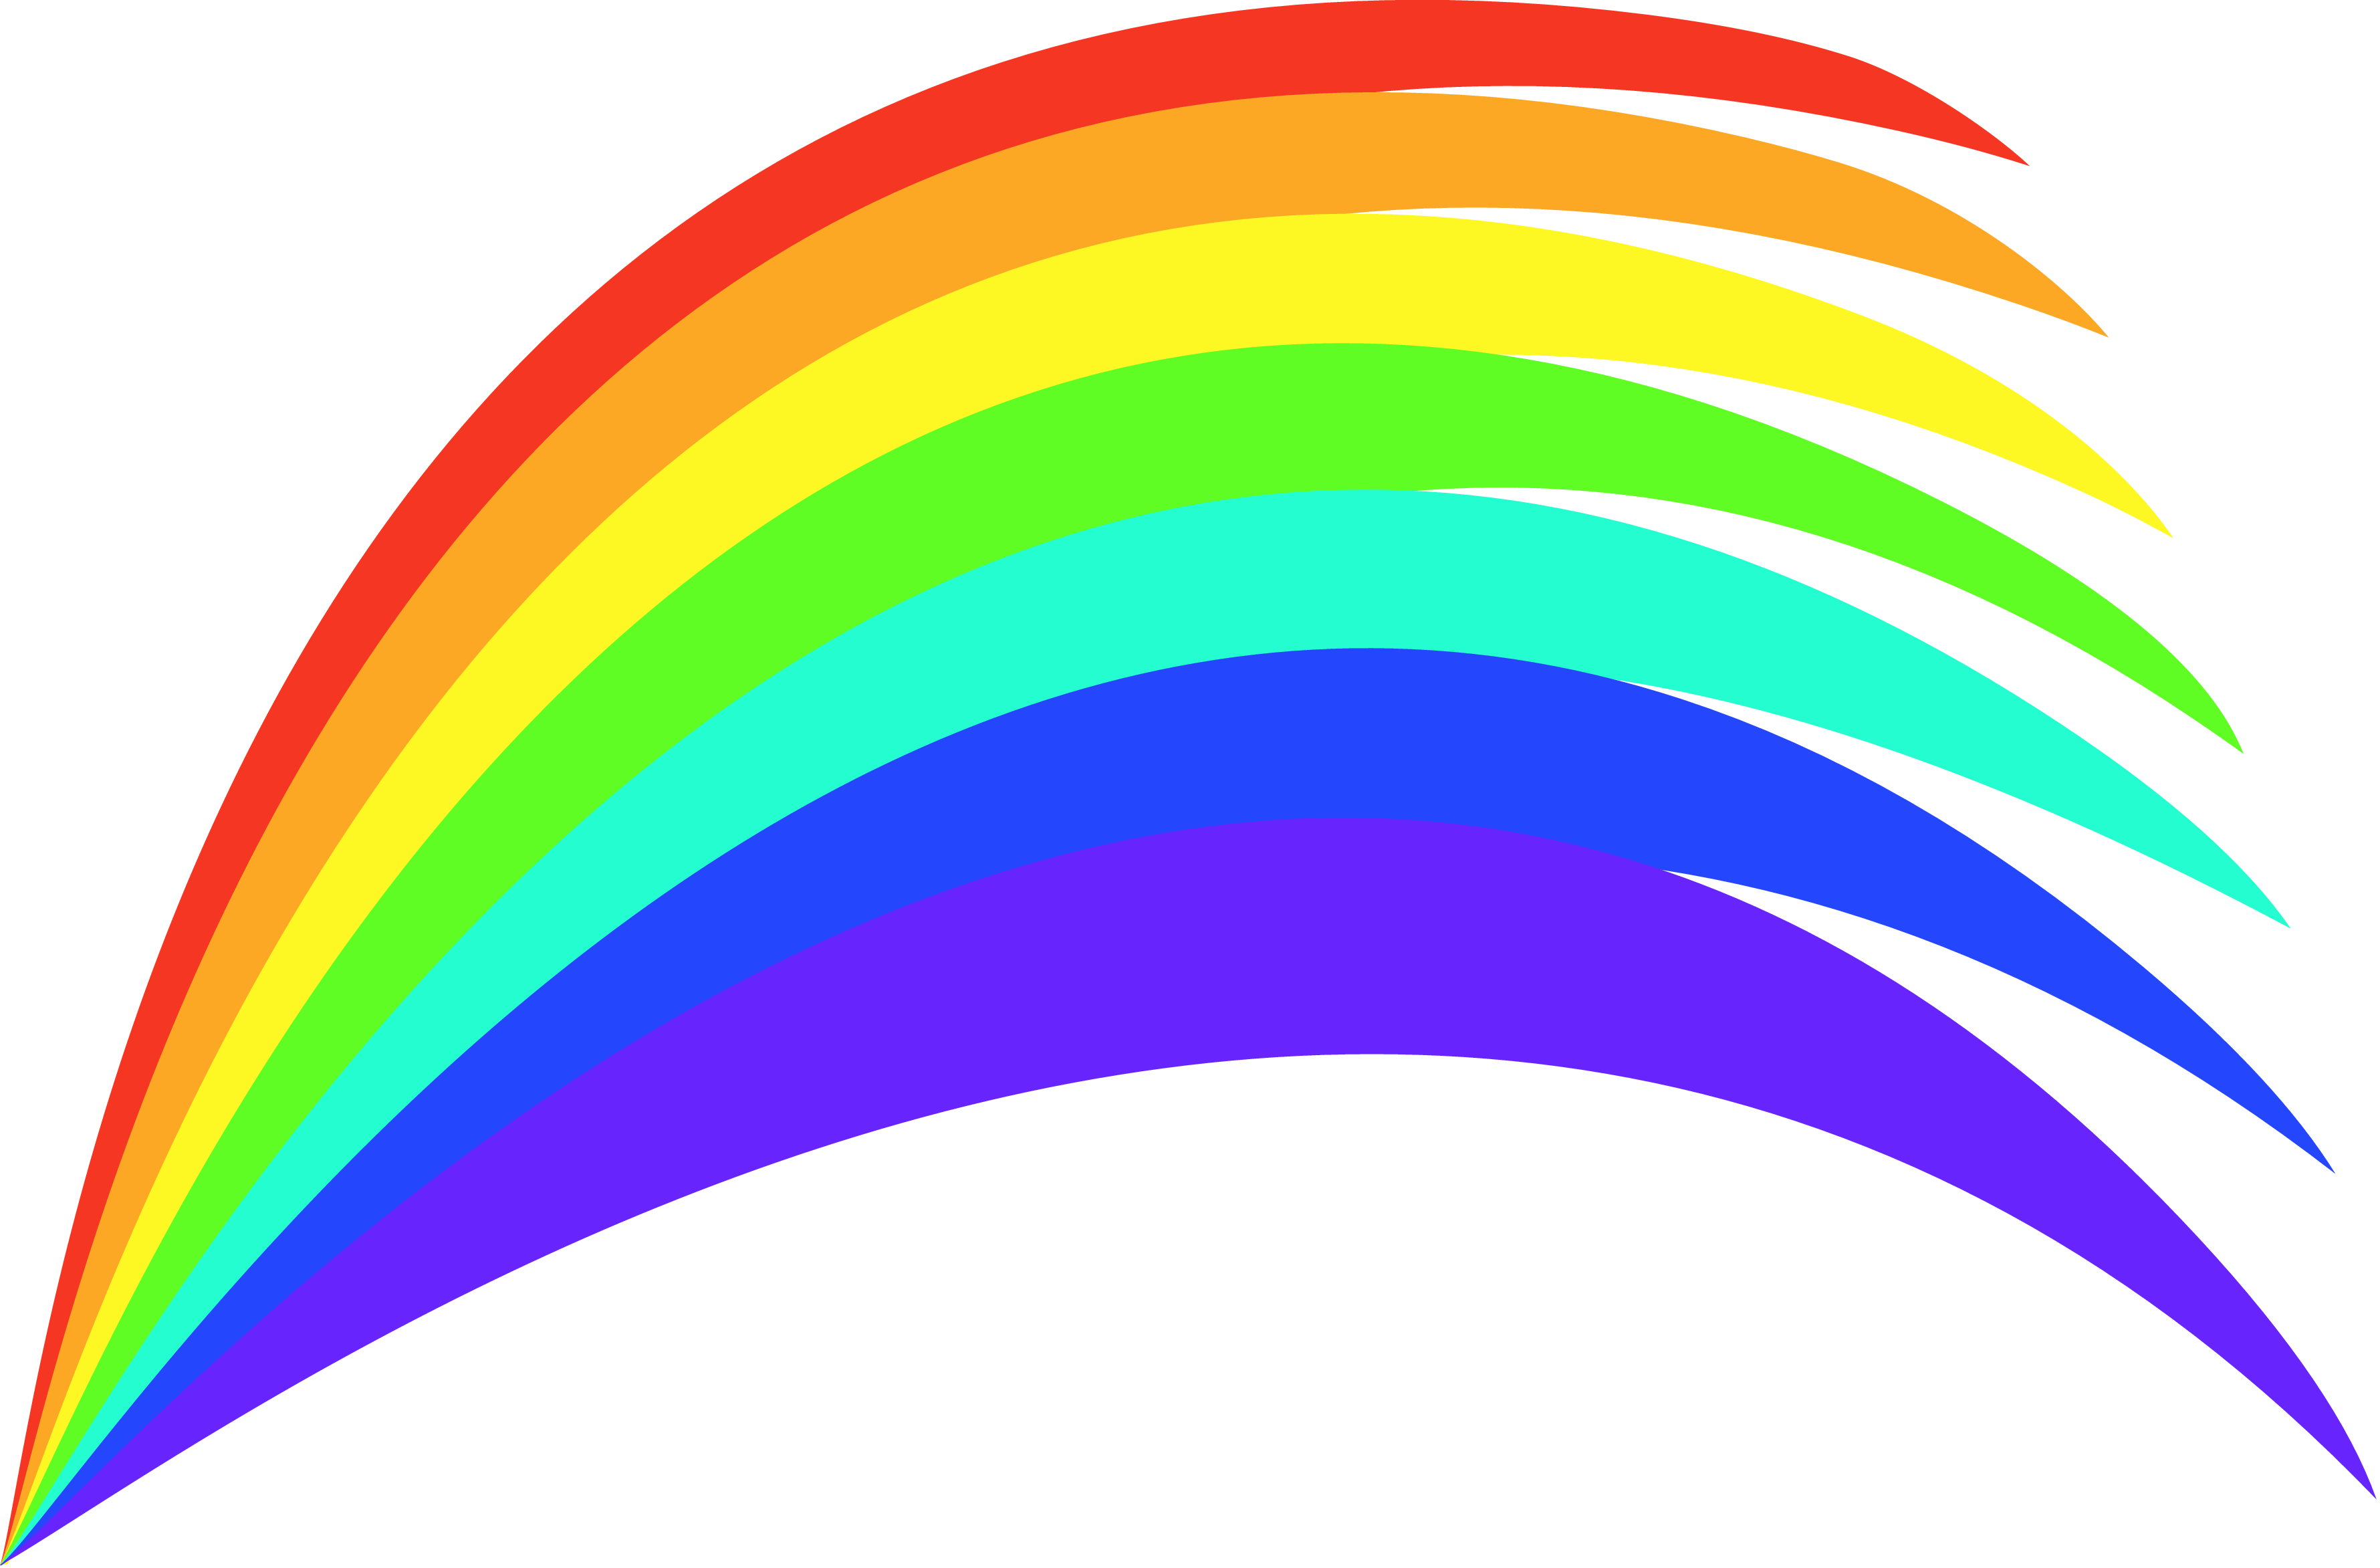 Cartoon Rainbow | Free Download Clip Art | Free Clip Art | on ...